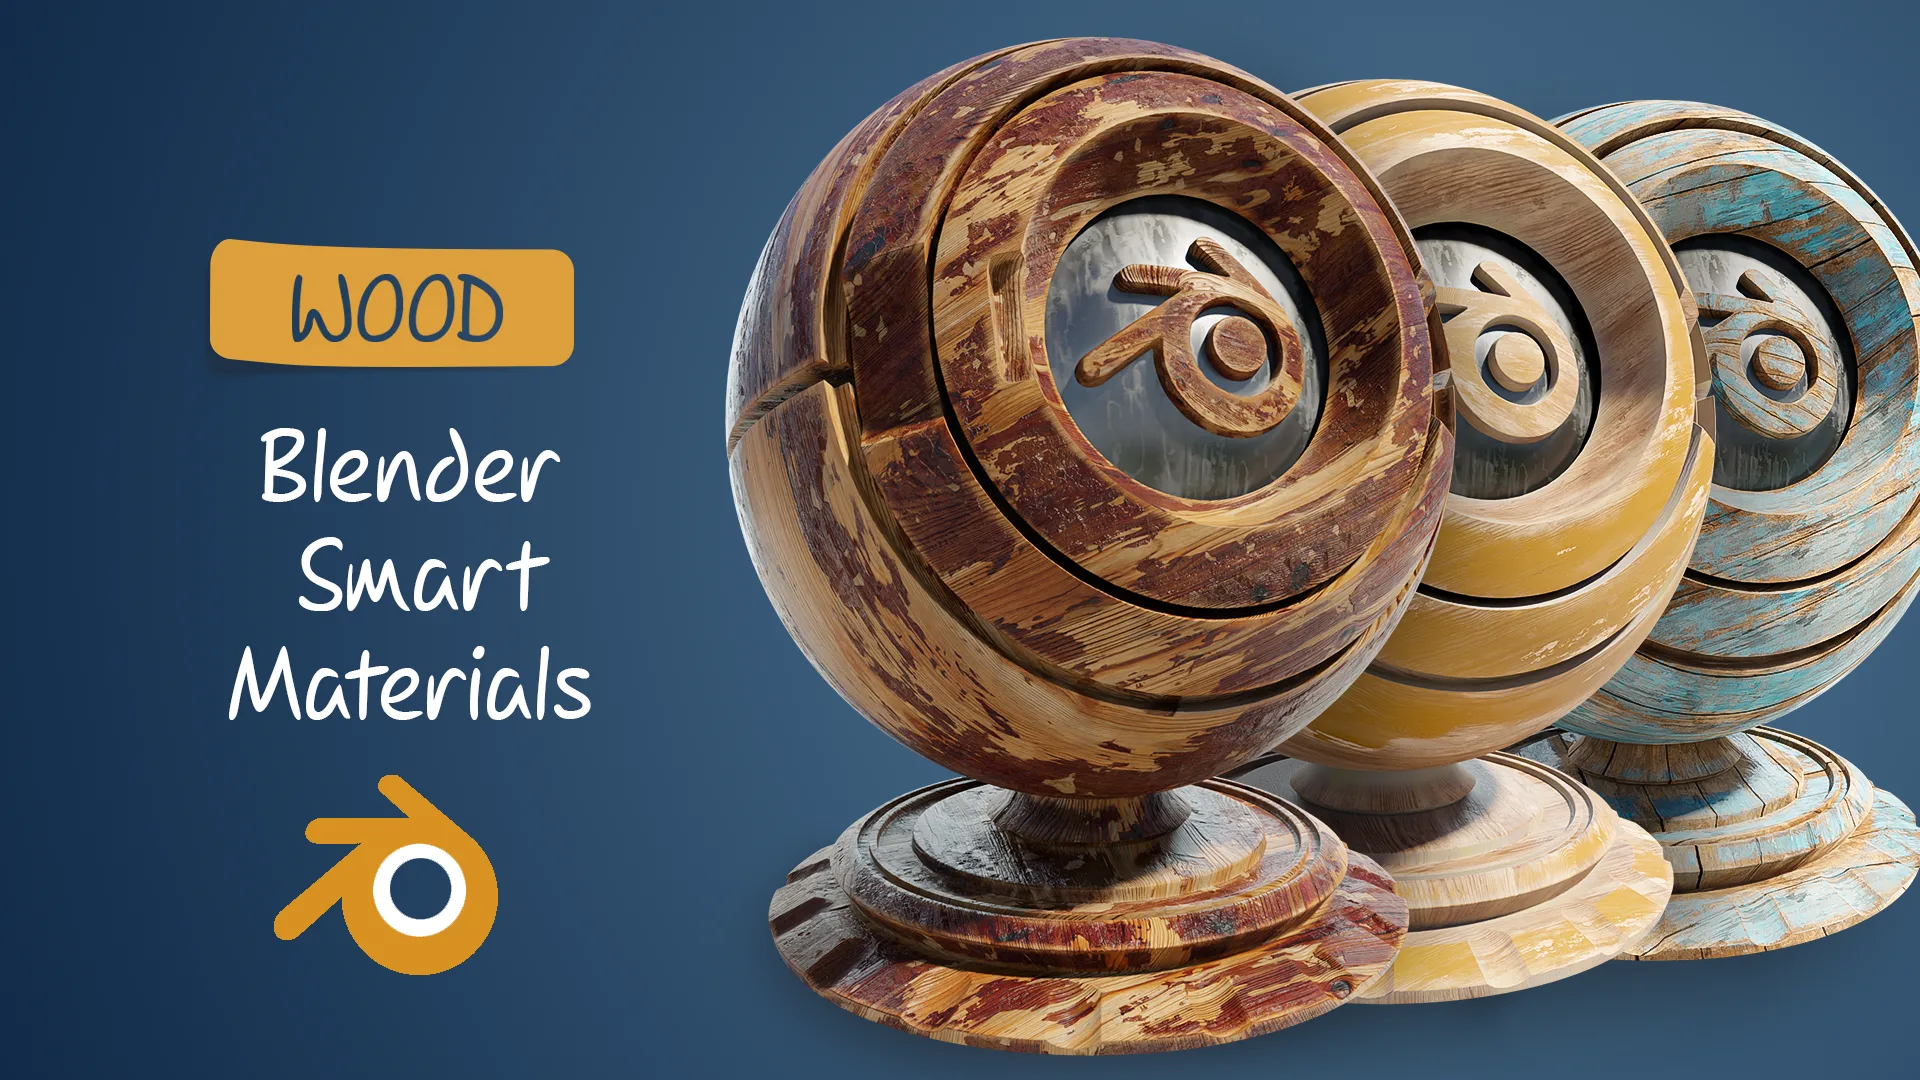 Blender Smart Materials _ Wood